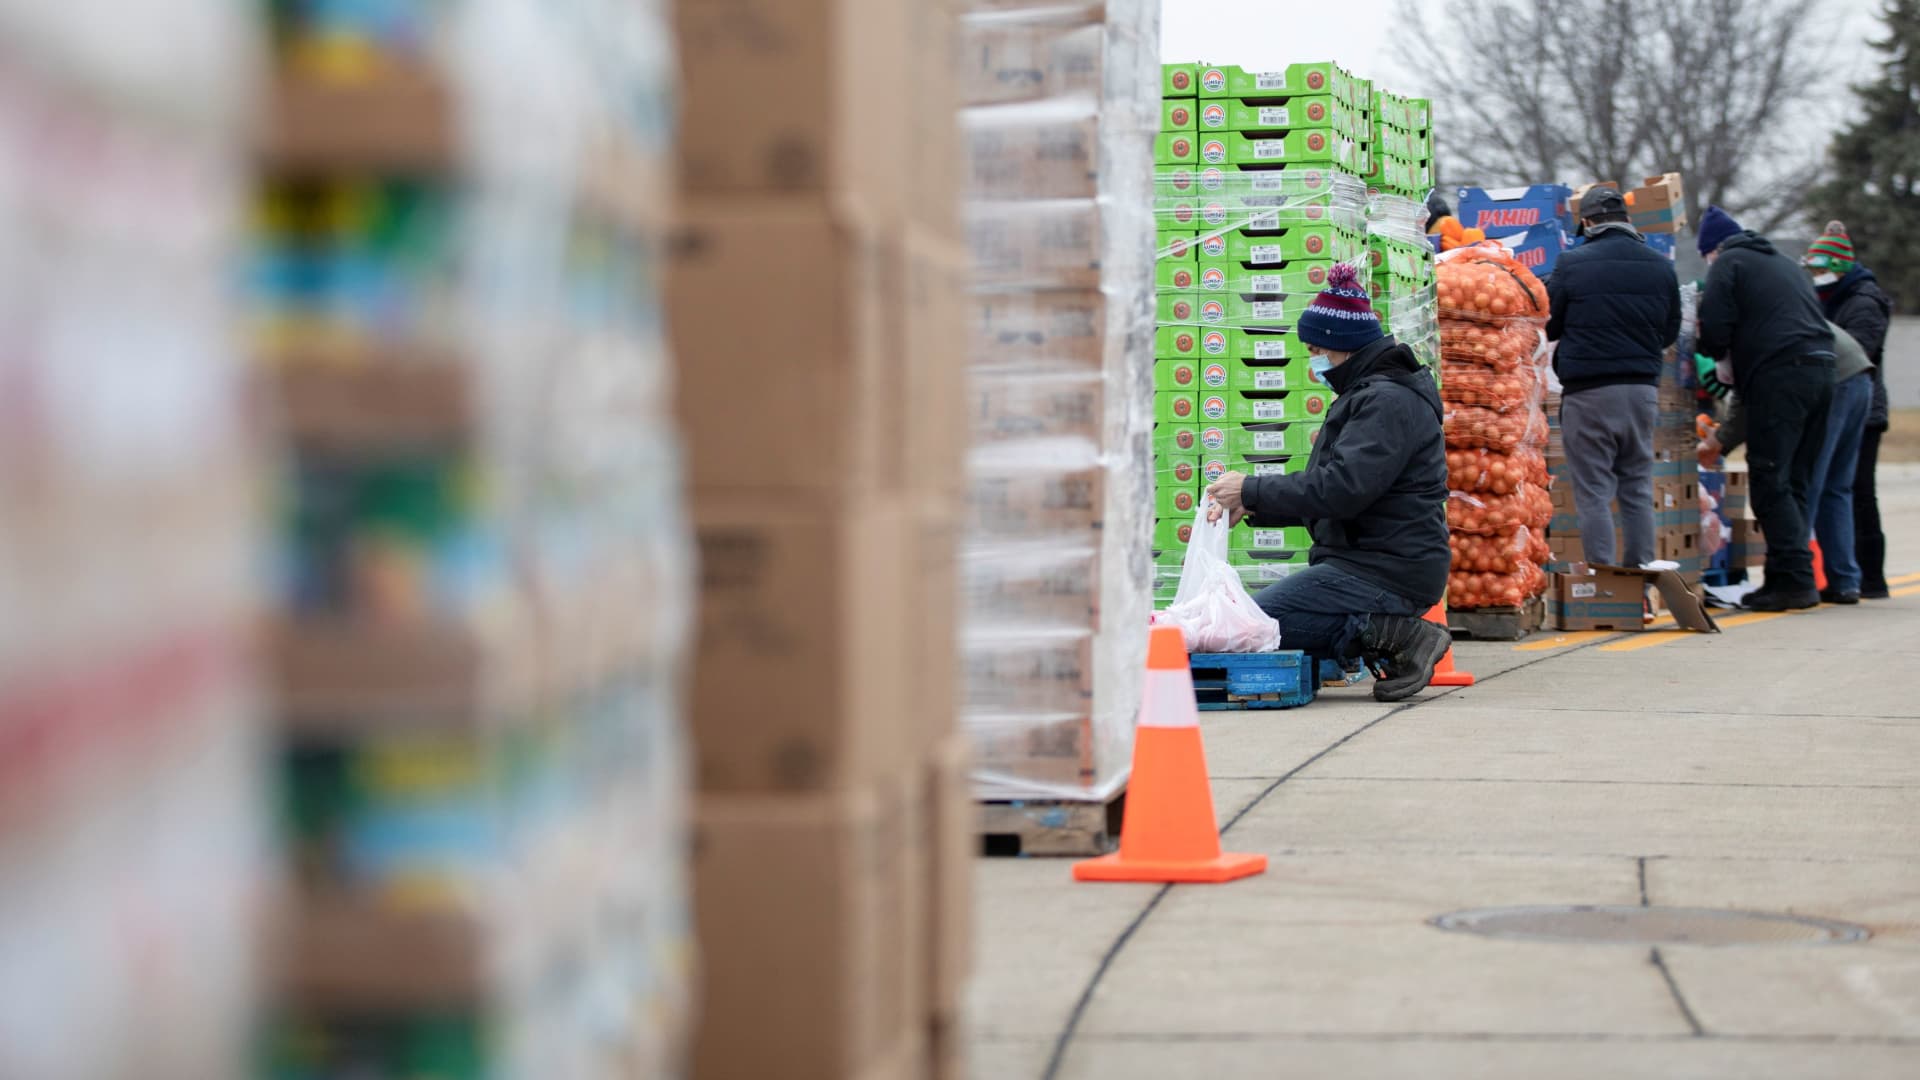 Volunteers from Forgotten Harvest food bank help sort goods to distribute during a mobile food pantry ahead of Christmas, amid the coronavirus disease (COVID-19) pandemic in Warren, Michigan, U.S., December 21, 2020.